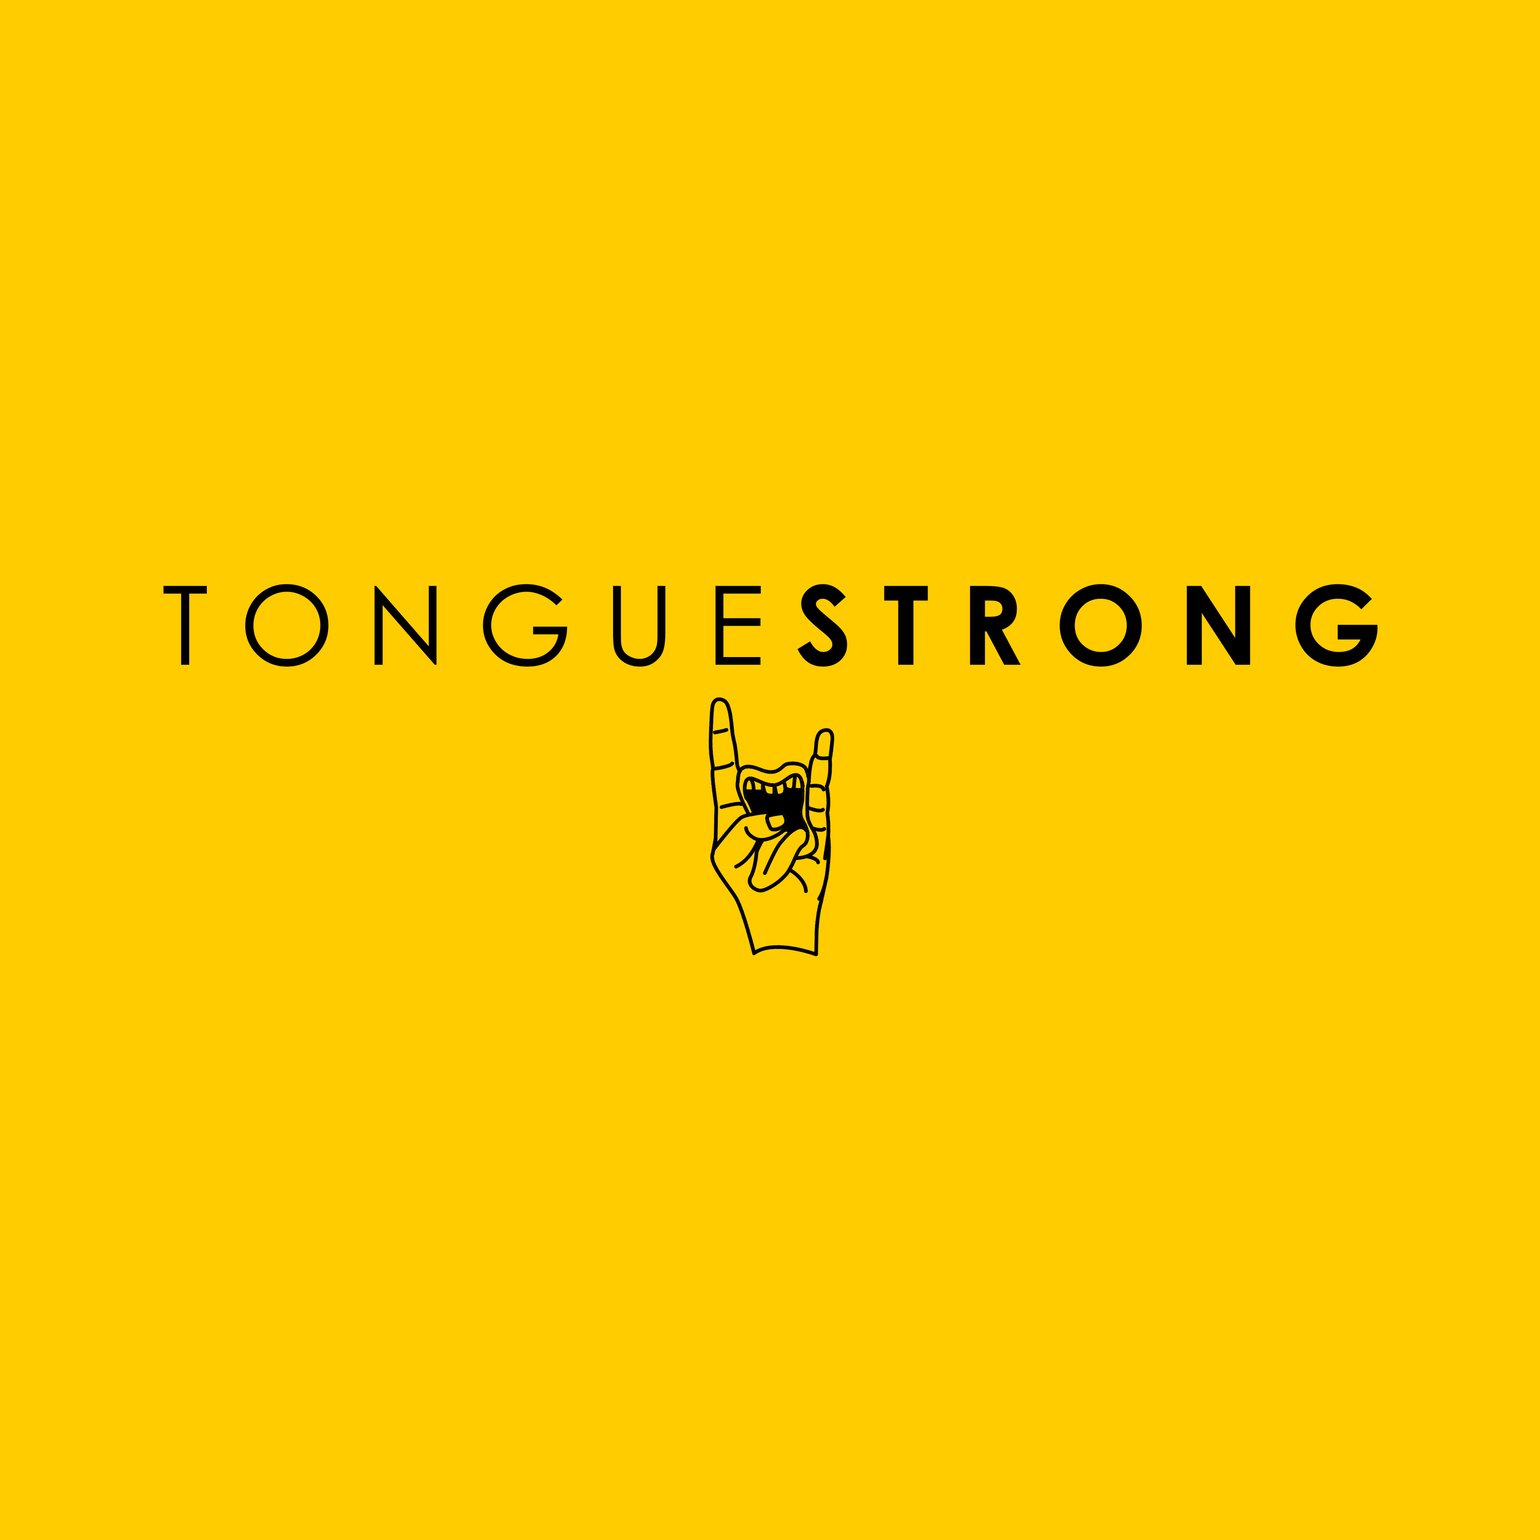 Image of Tongue STRONG